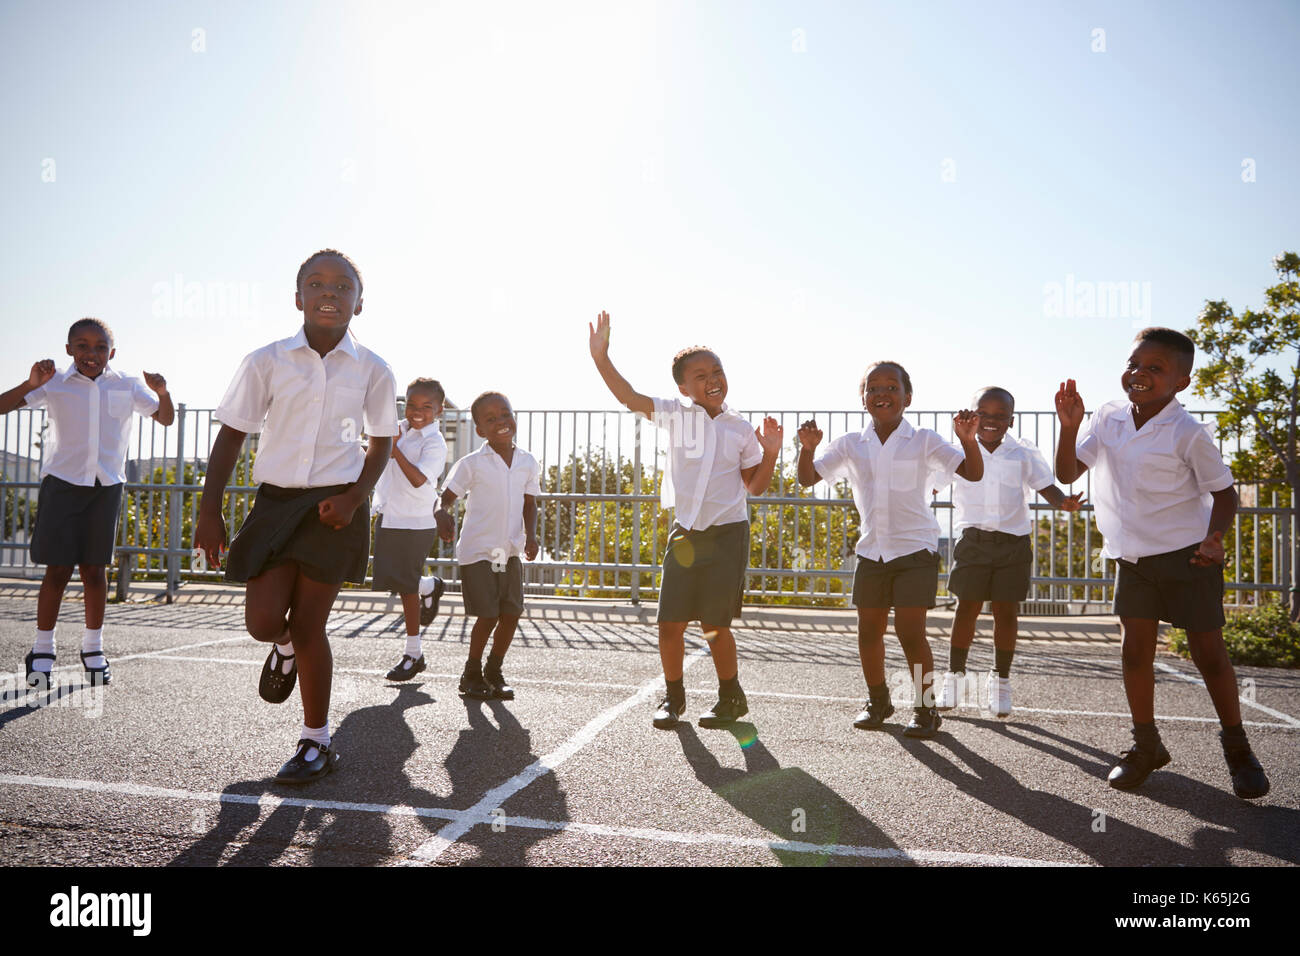 Elementary school kids having fun in school playground Stock Photo